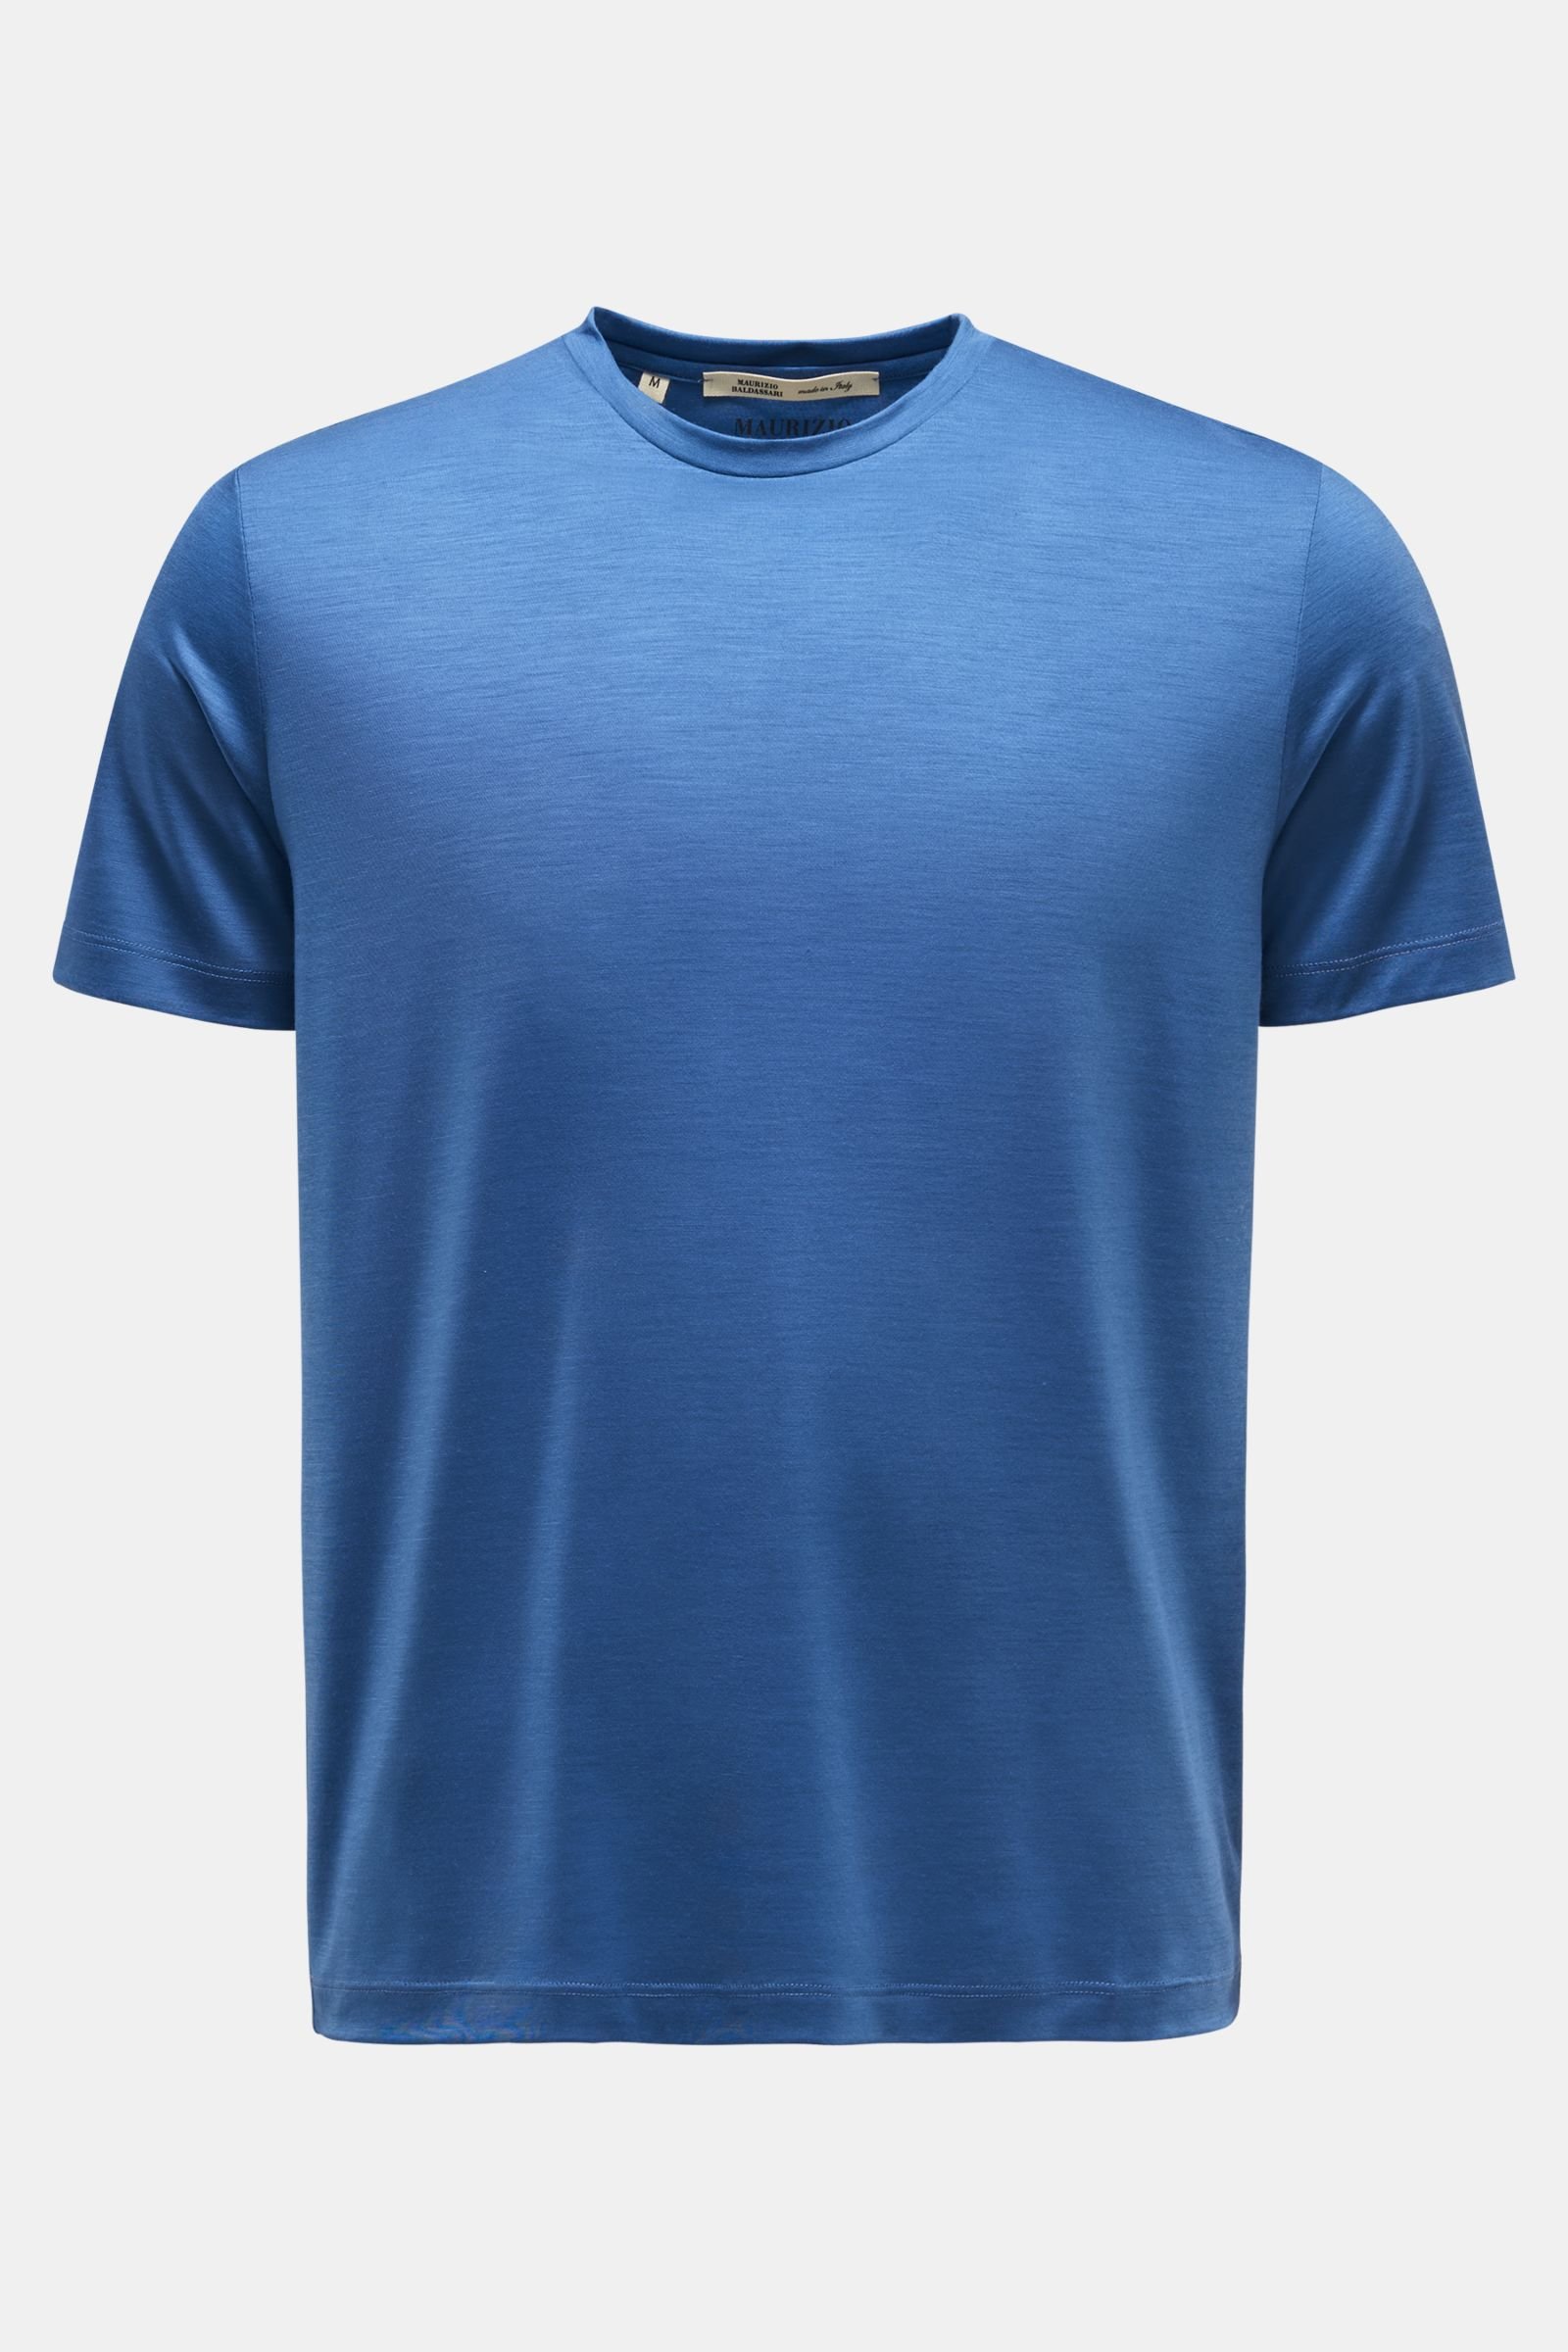 Crew neck-T-shirt blue